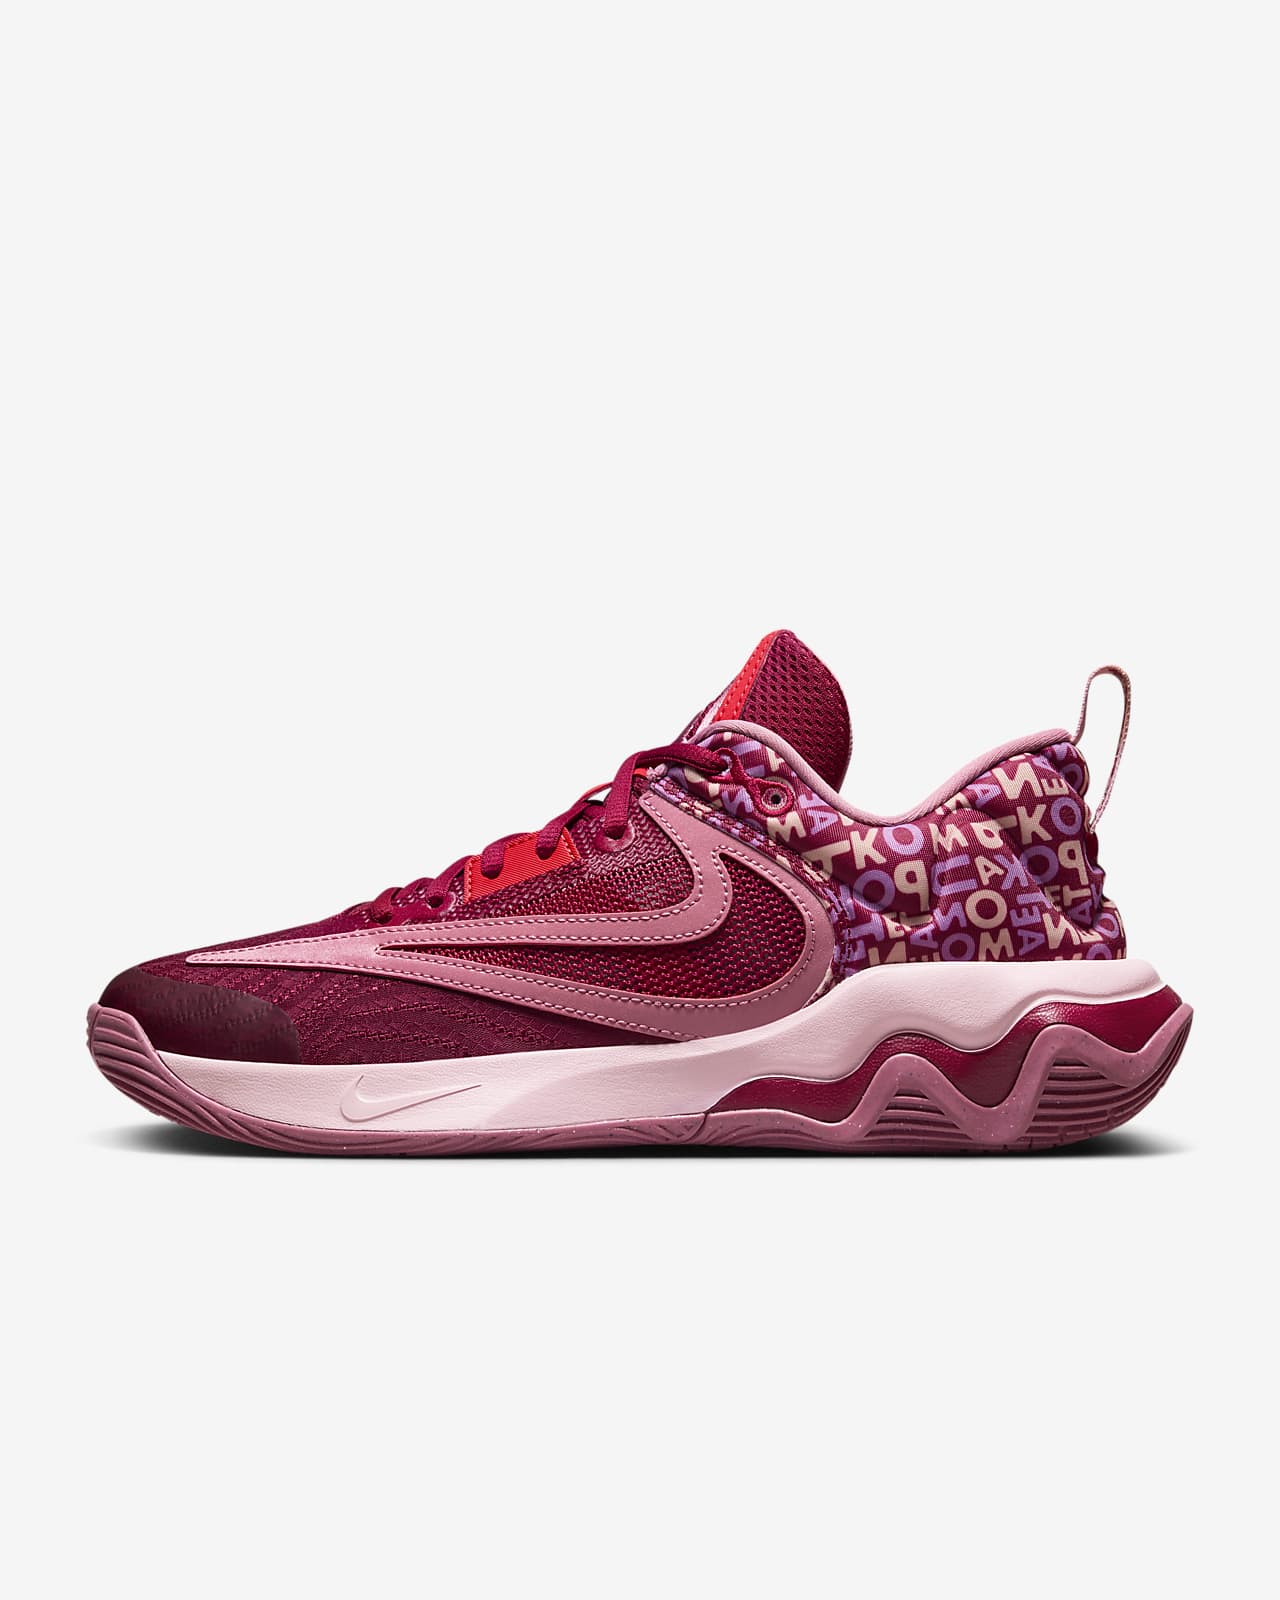 Zapatillas de baloncesto Nike